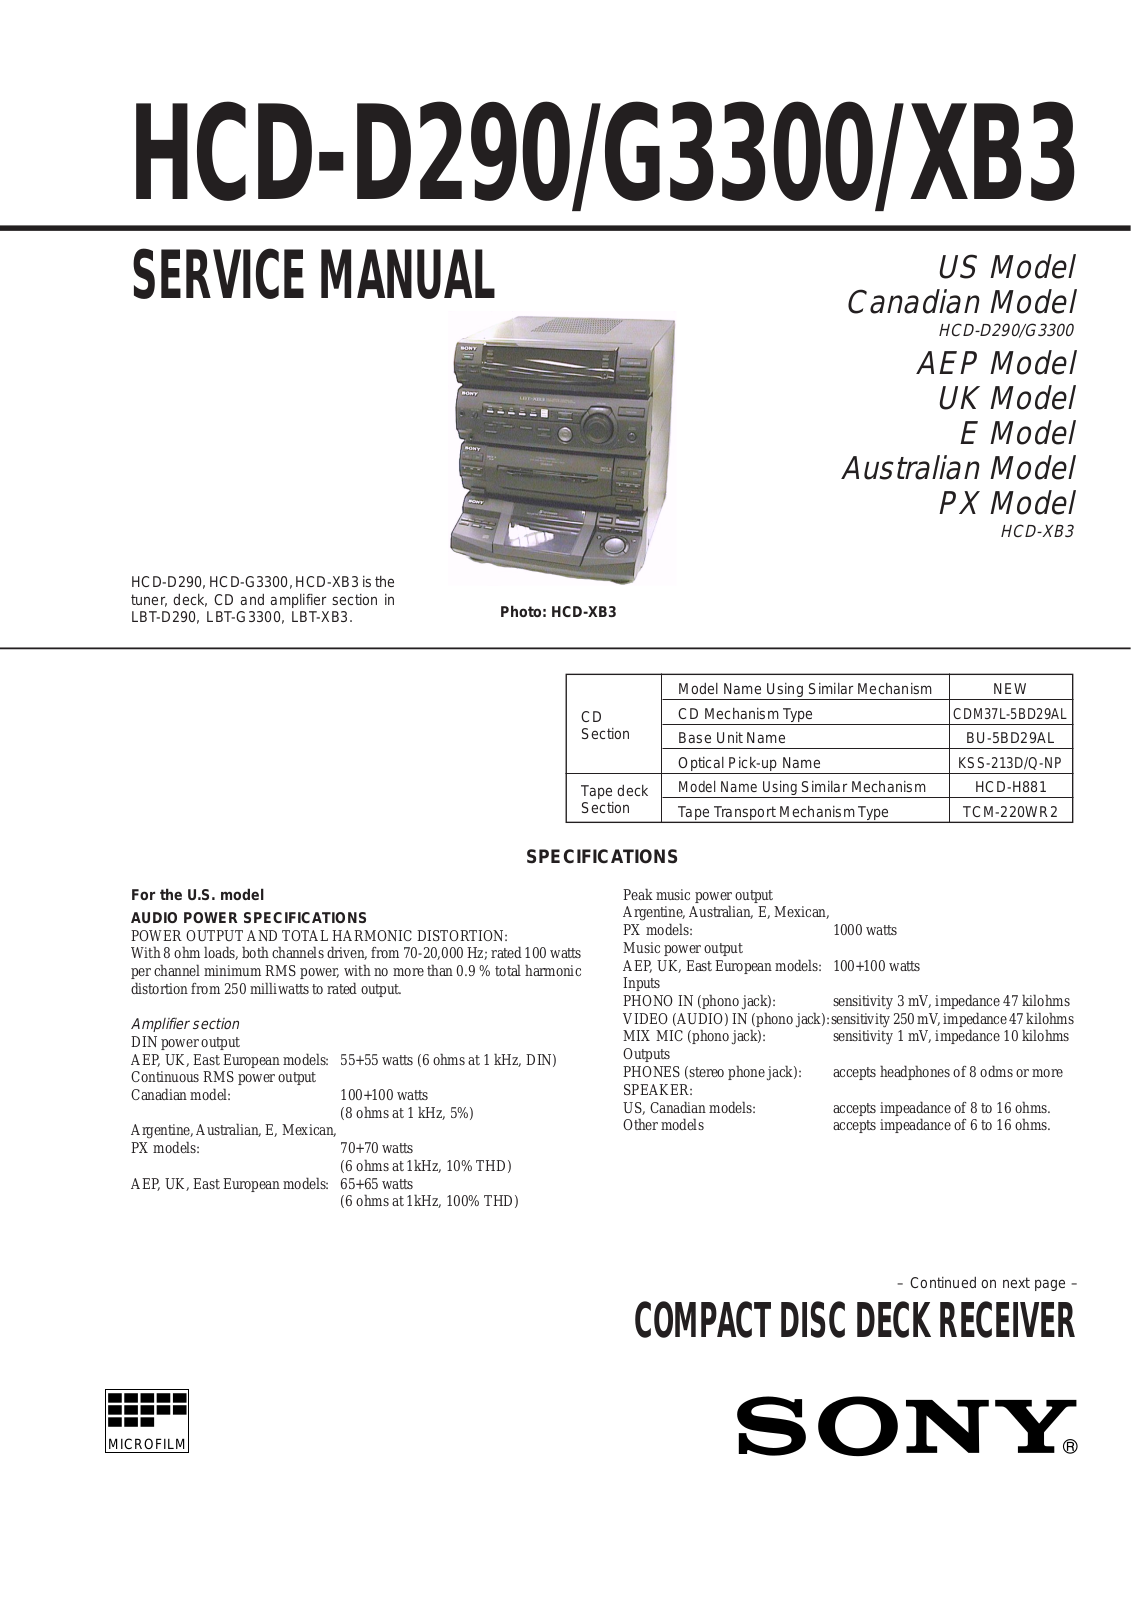 Sony HCD-XB3, HCD-G3300, HCD-D290 User Manual